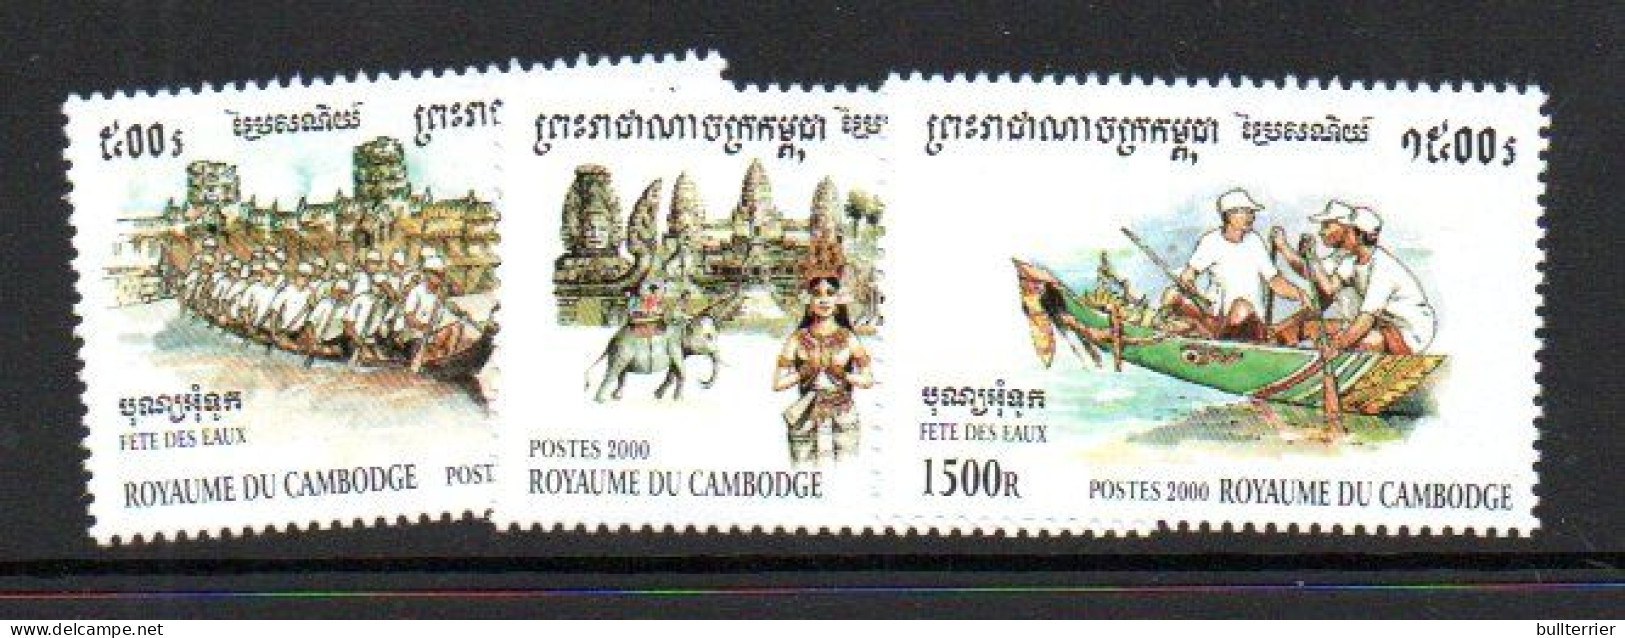 CAMBODIA -  2000 - TOURISM SET OF 4 MINT NEVER HINGED - Cambodia